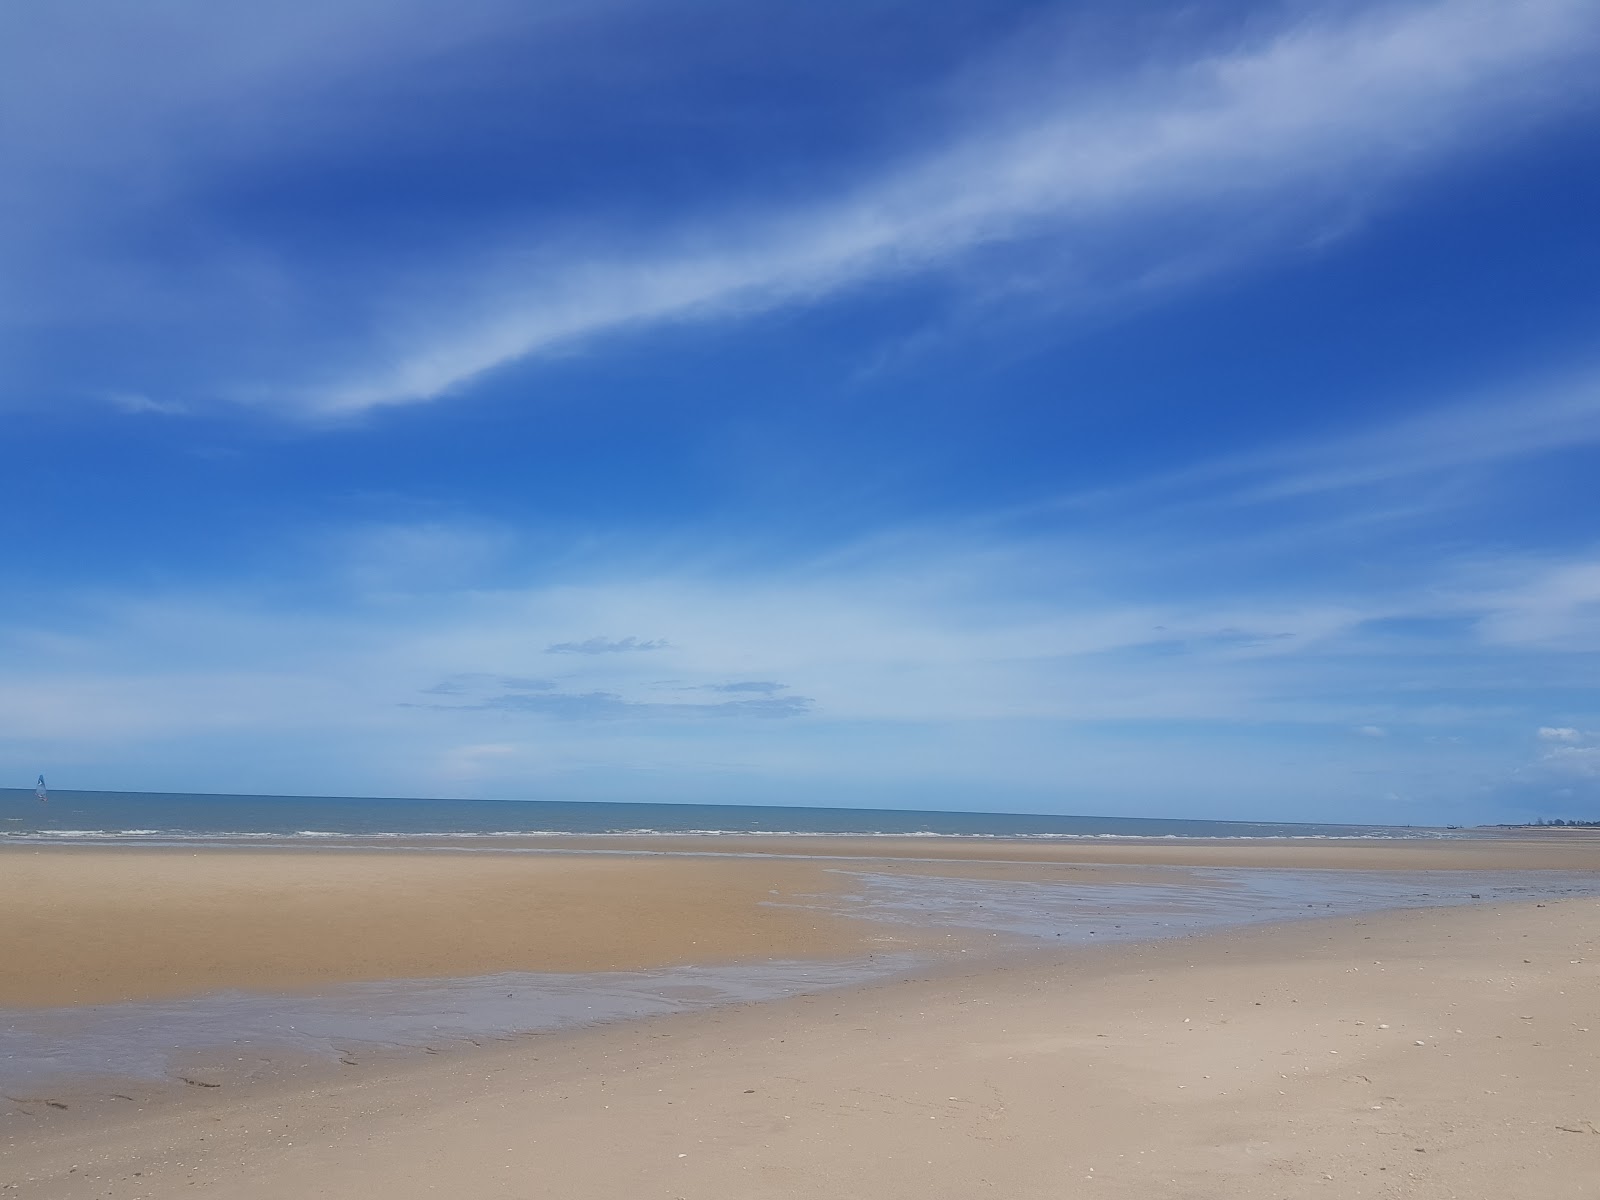 Foto de Kaew Beach - lugar popular entre os apreciadores de relaxamento